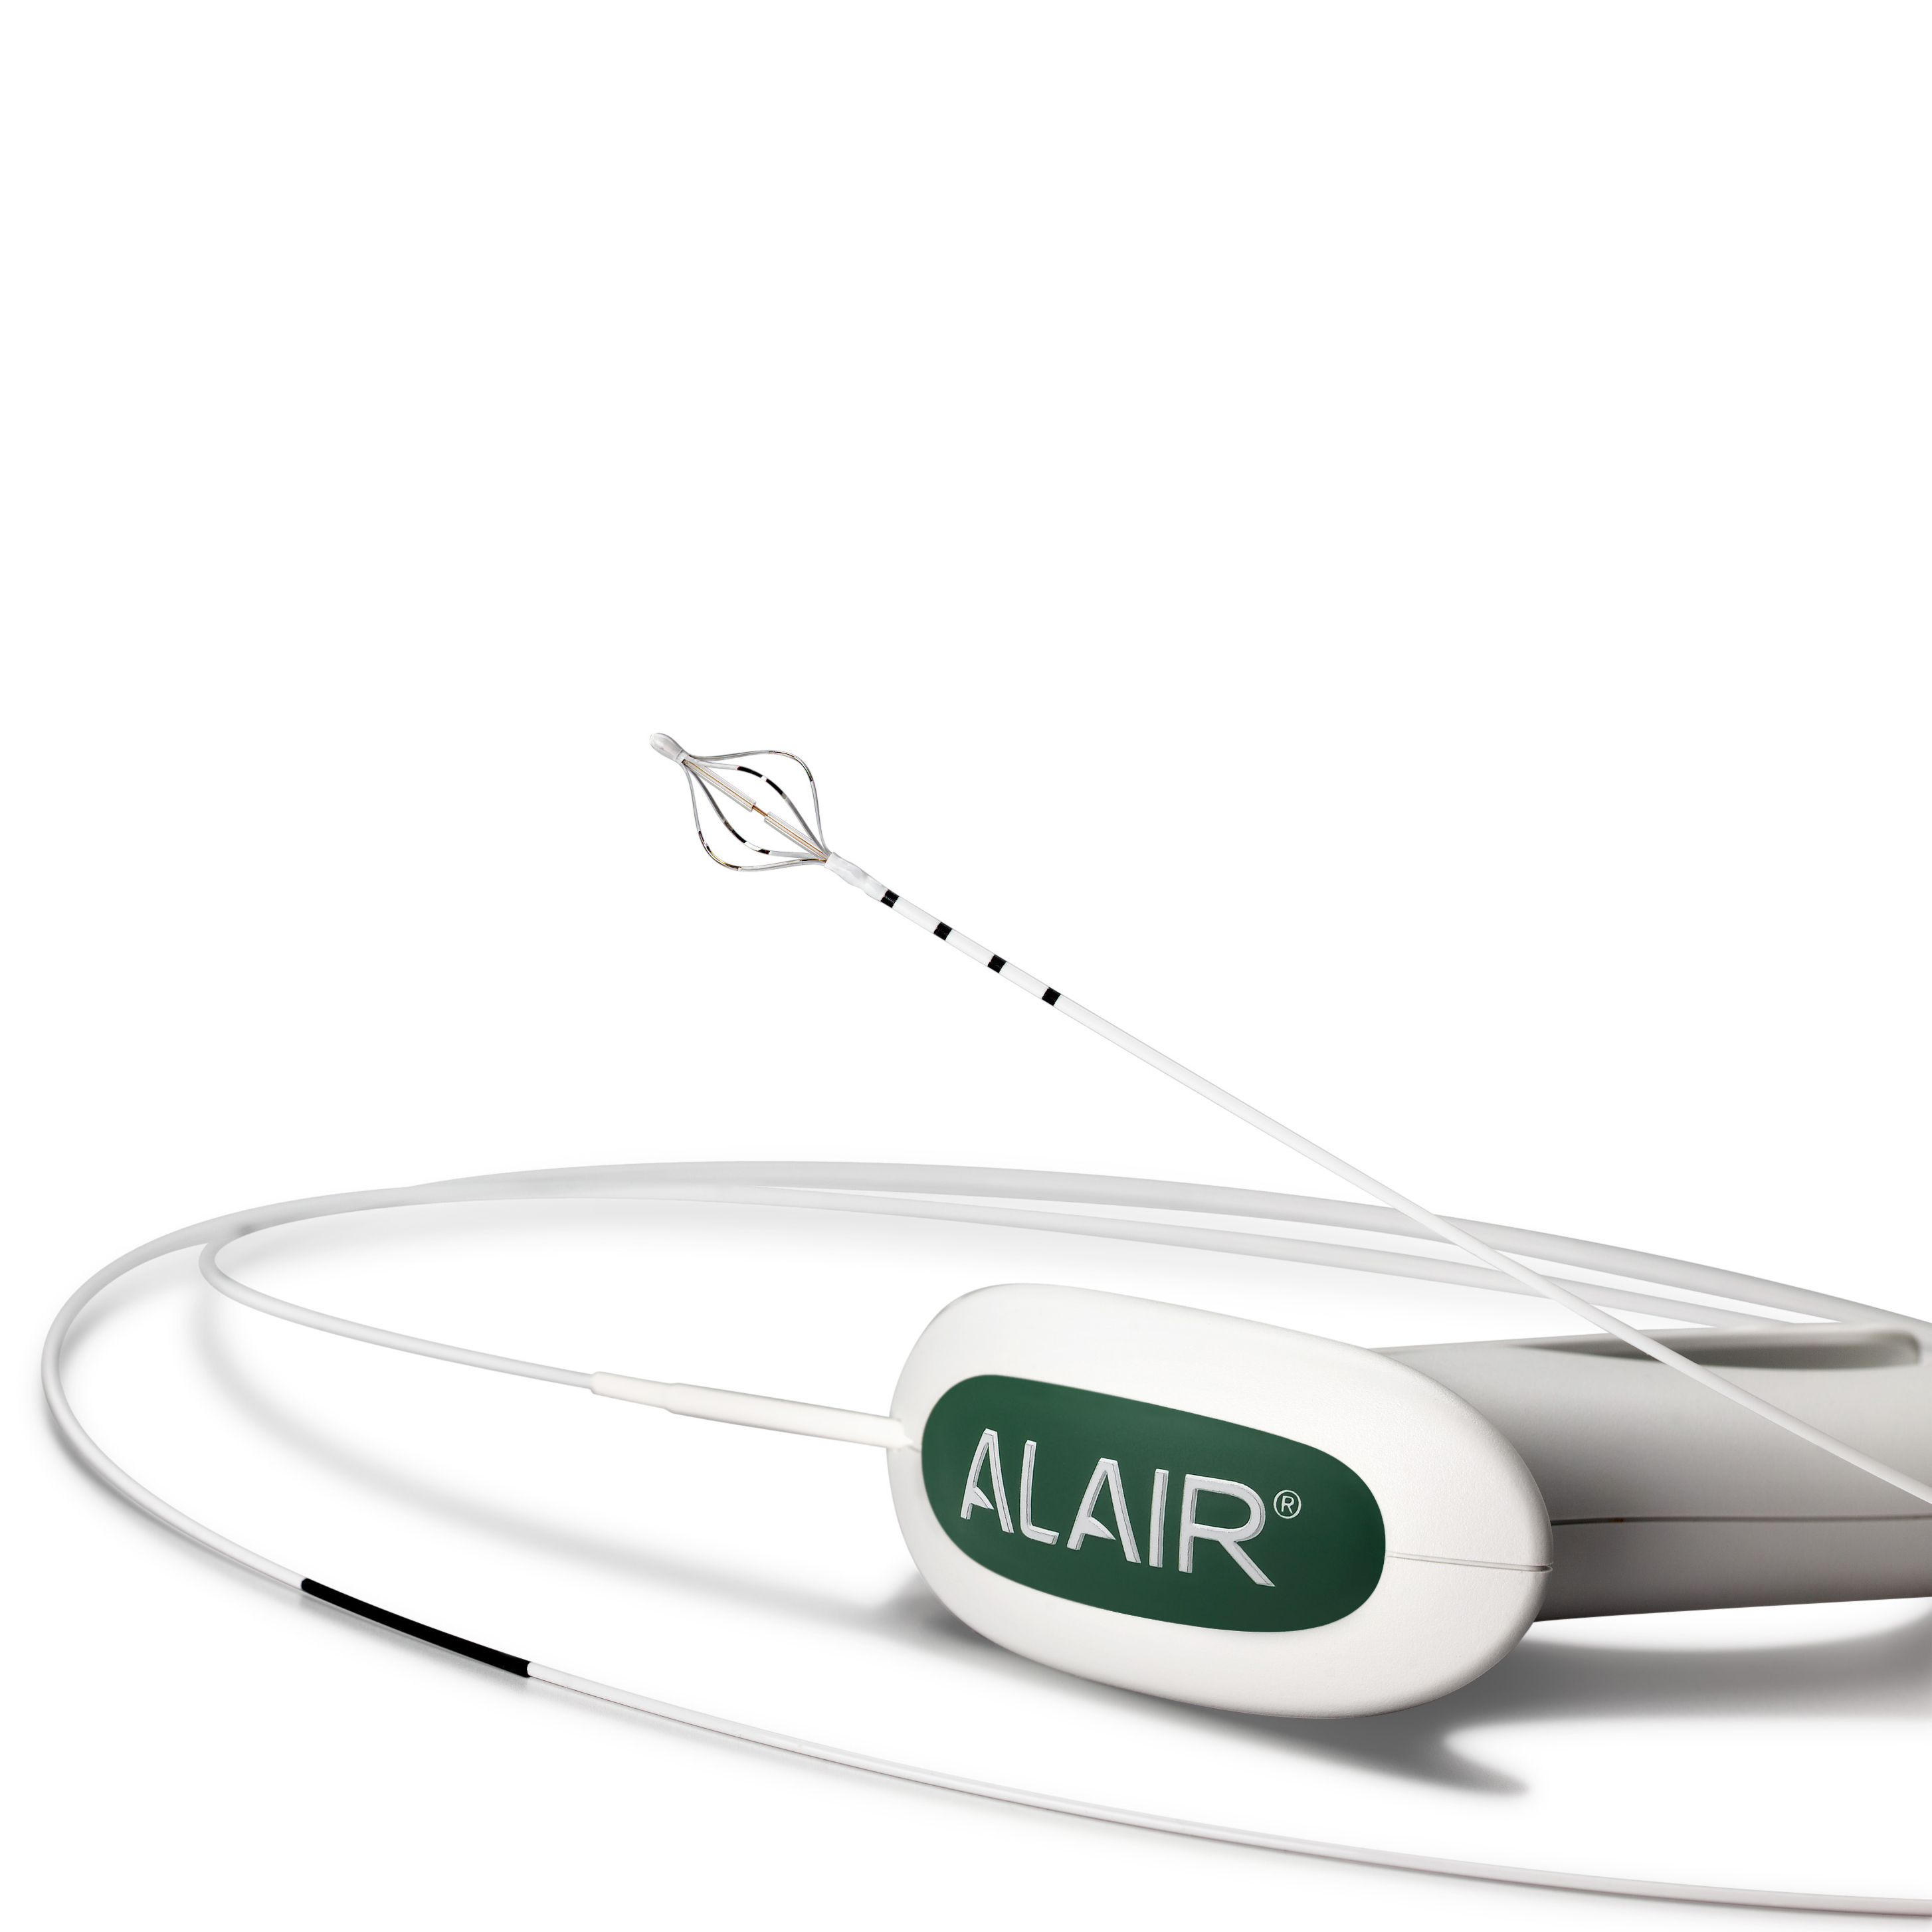 The Alair Catheter for BT